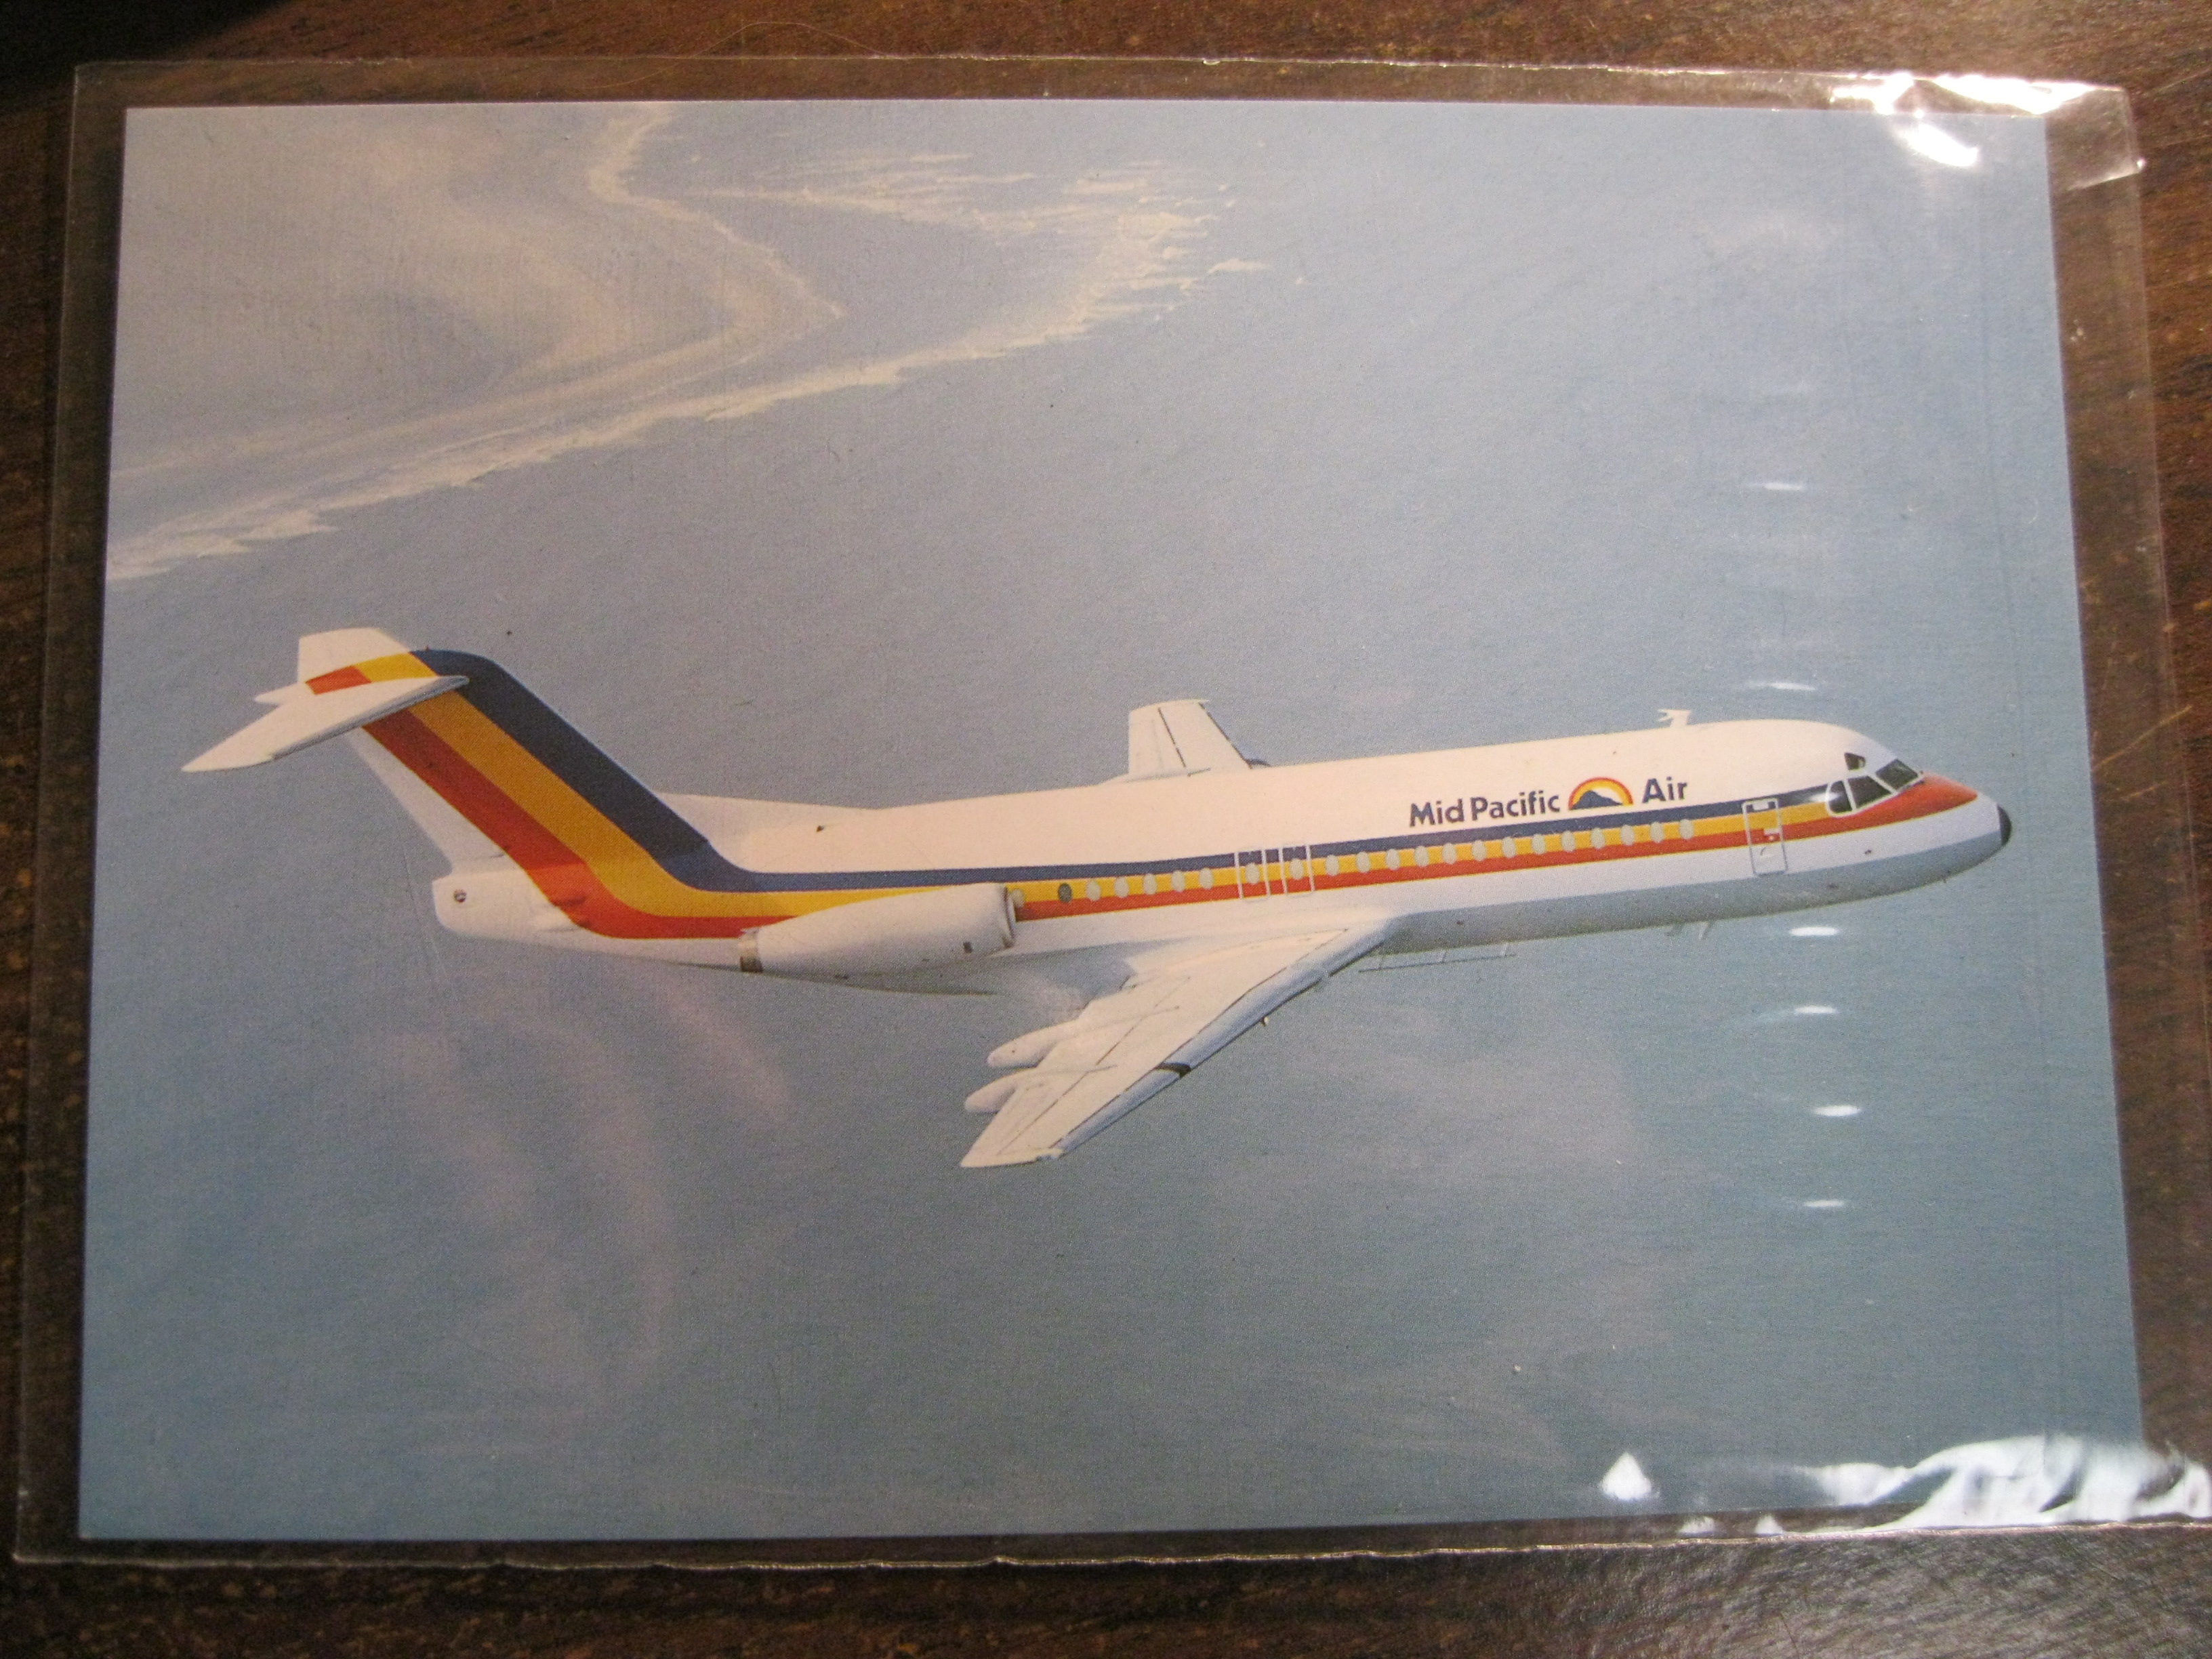 Mid Pacific Air Fokker F28 Mk4000 post card